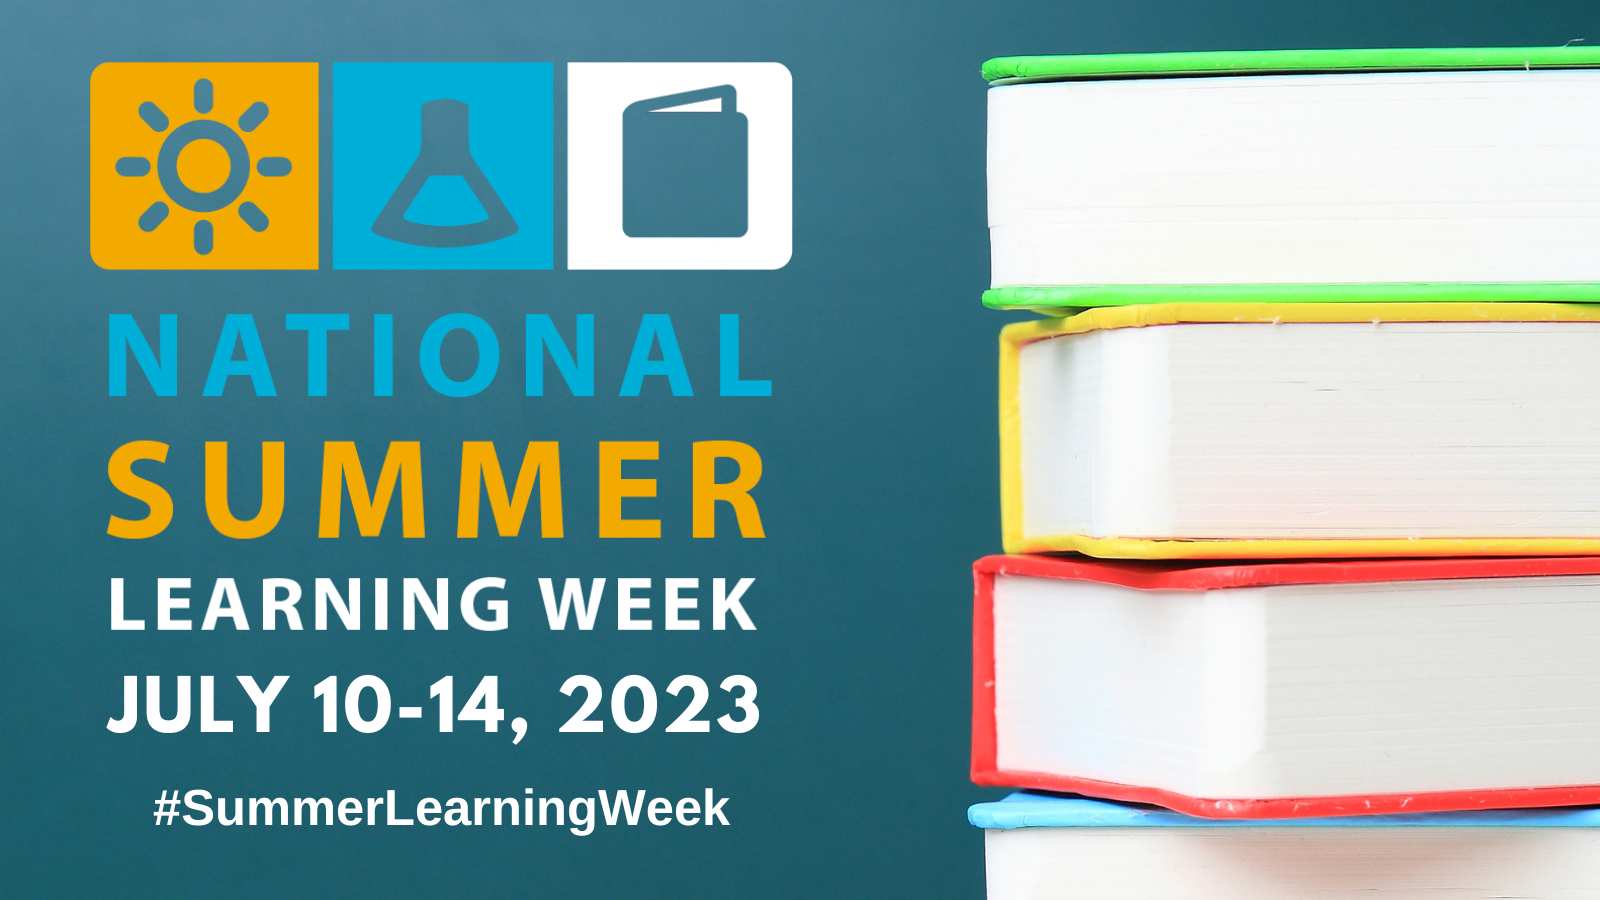 National Summer Learning Week, July 10-14, 2023